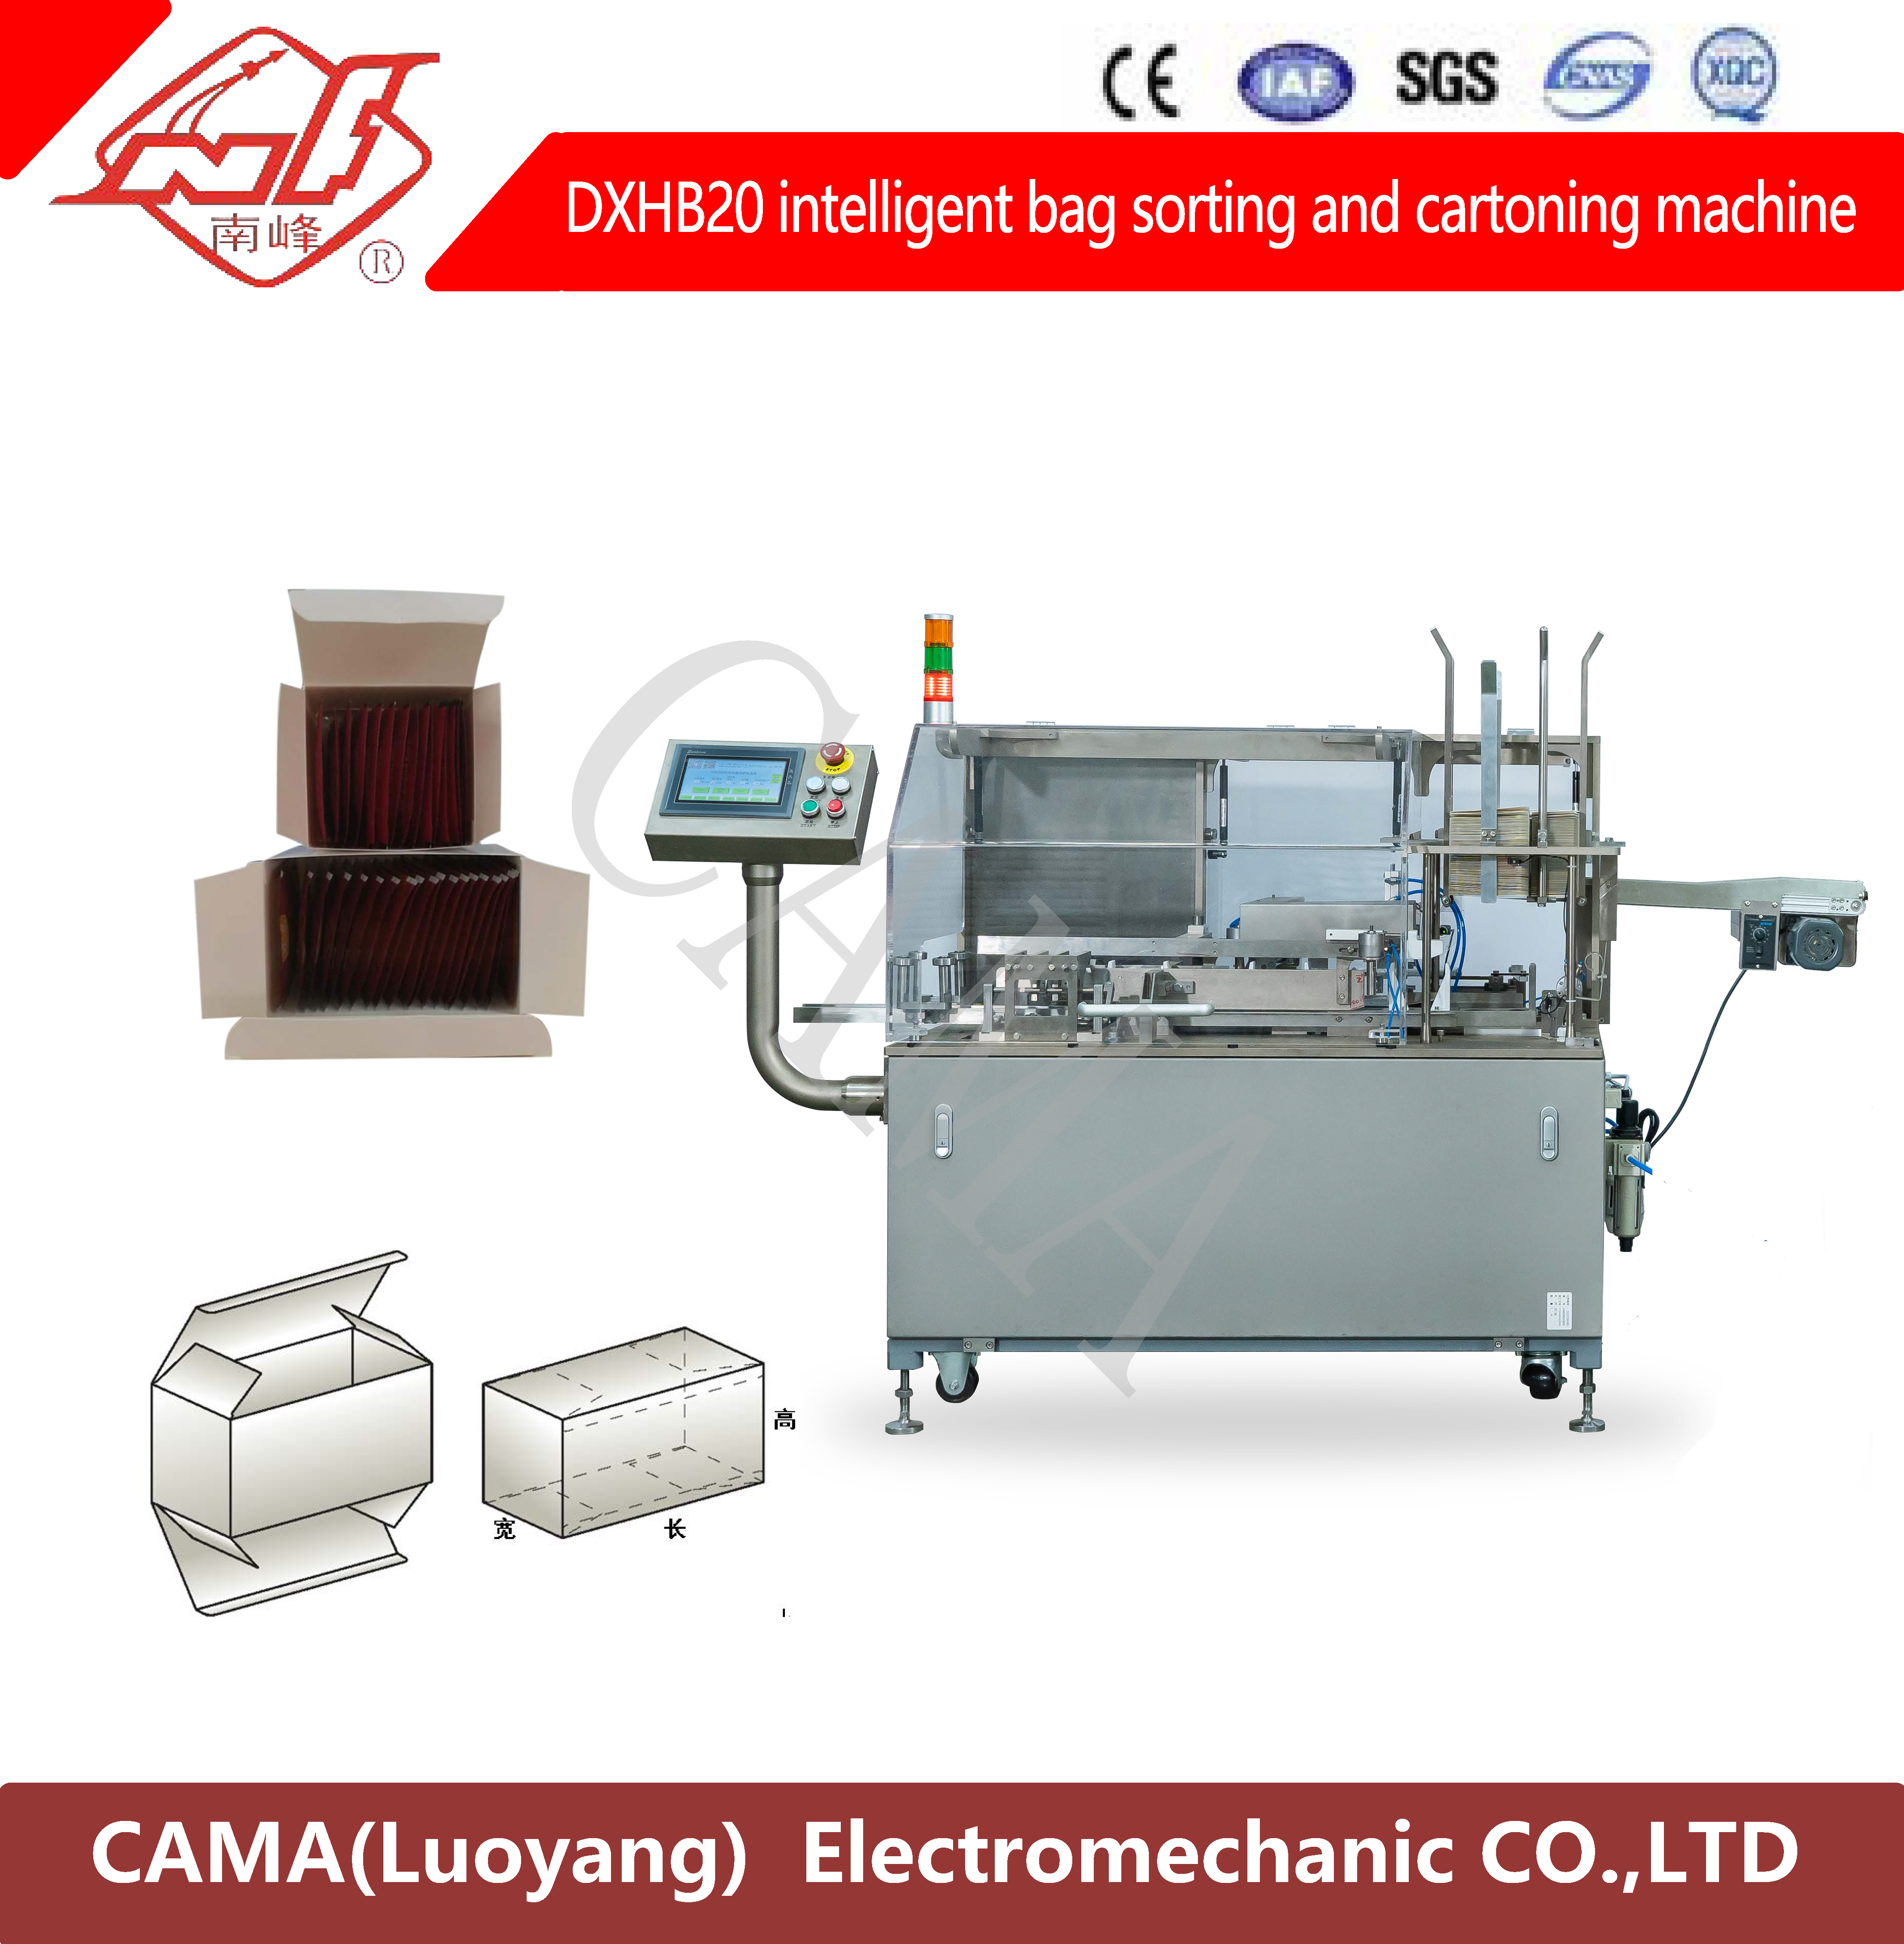 CAMA (LuoYang)Electromechanic Co.,Ltd.